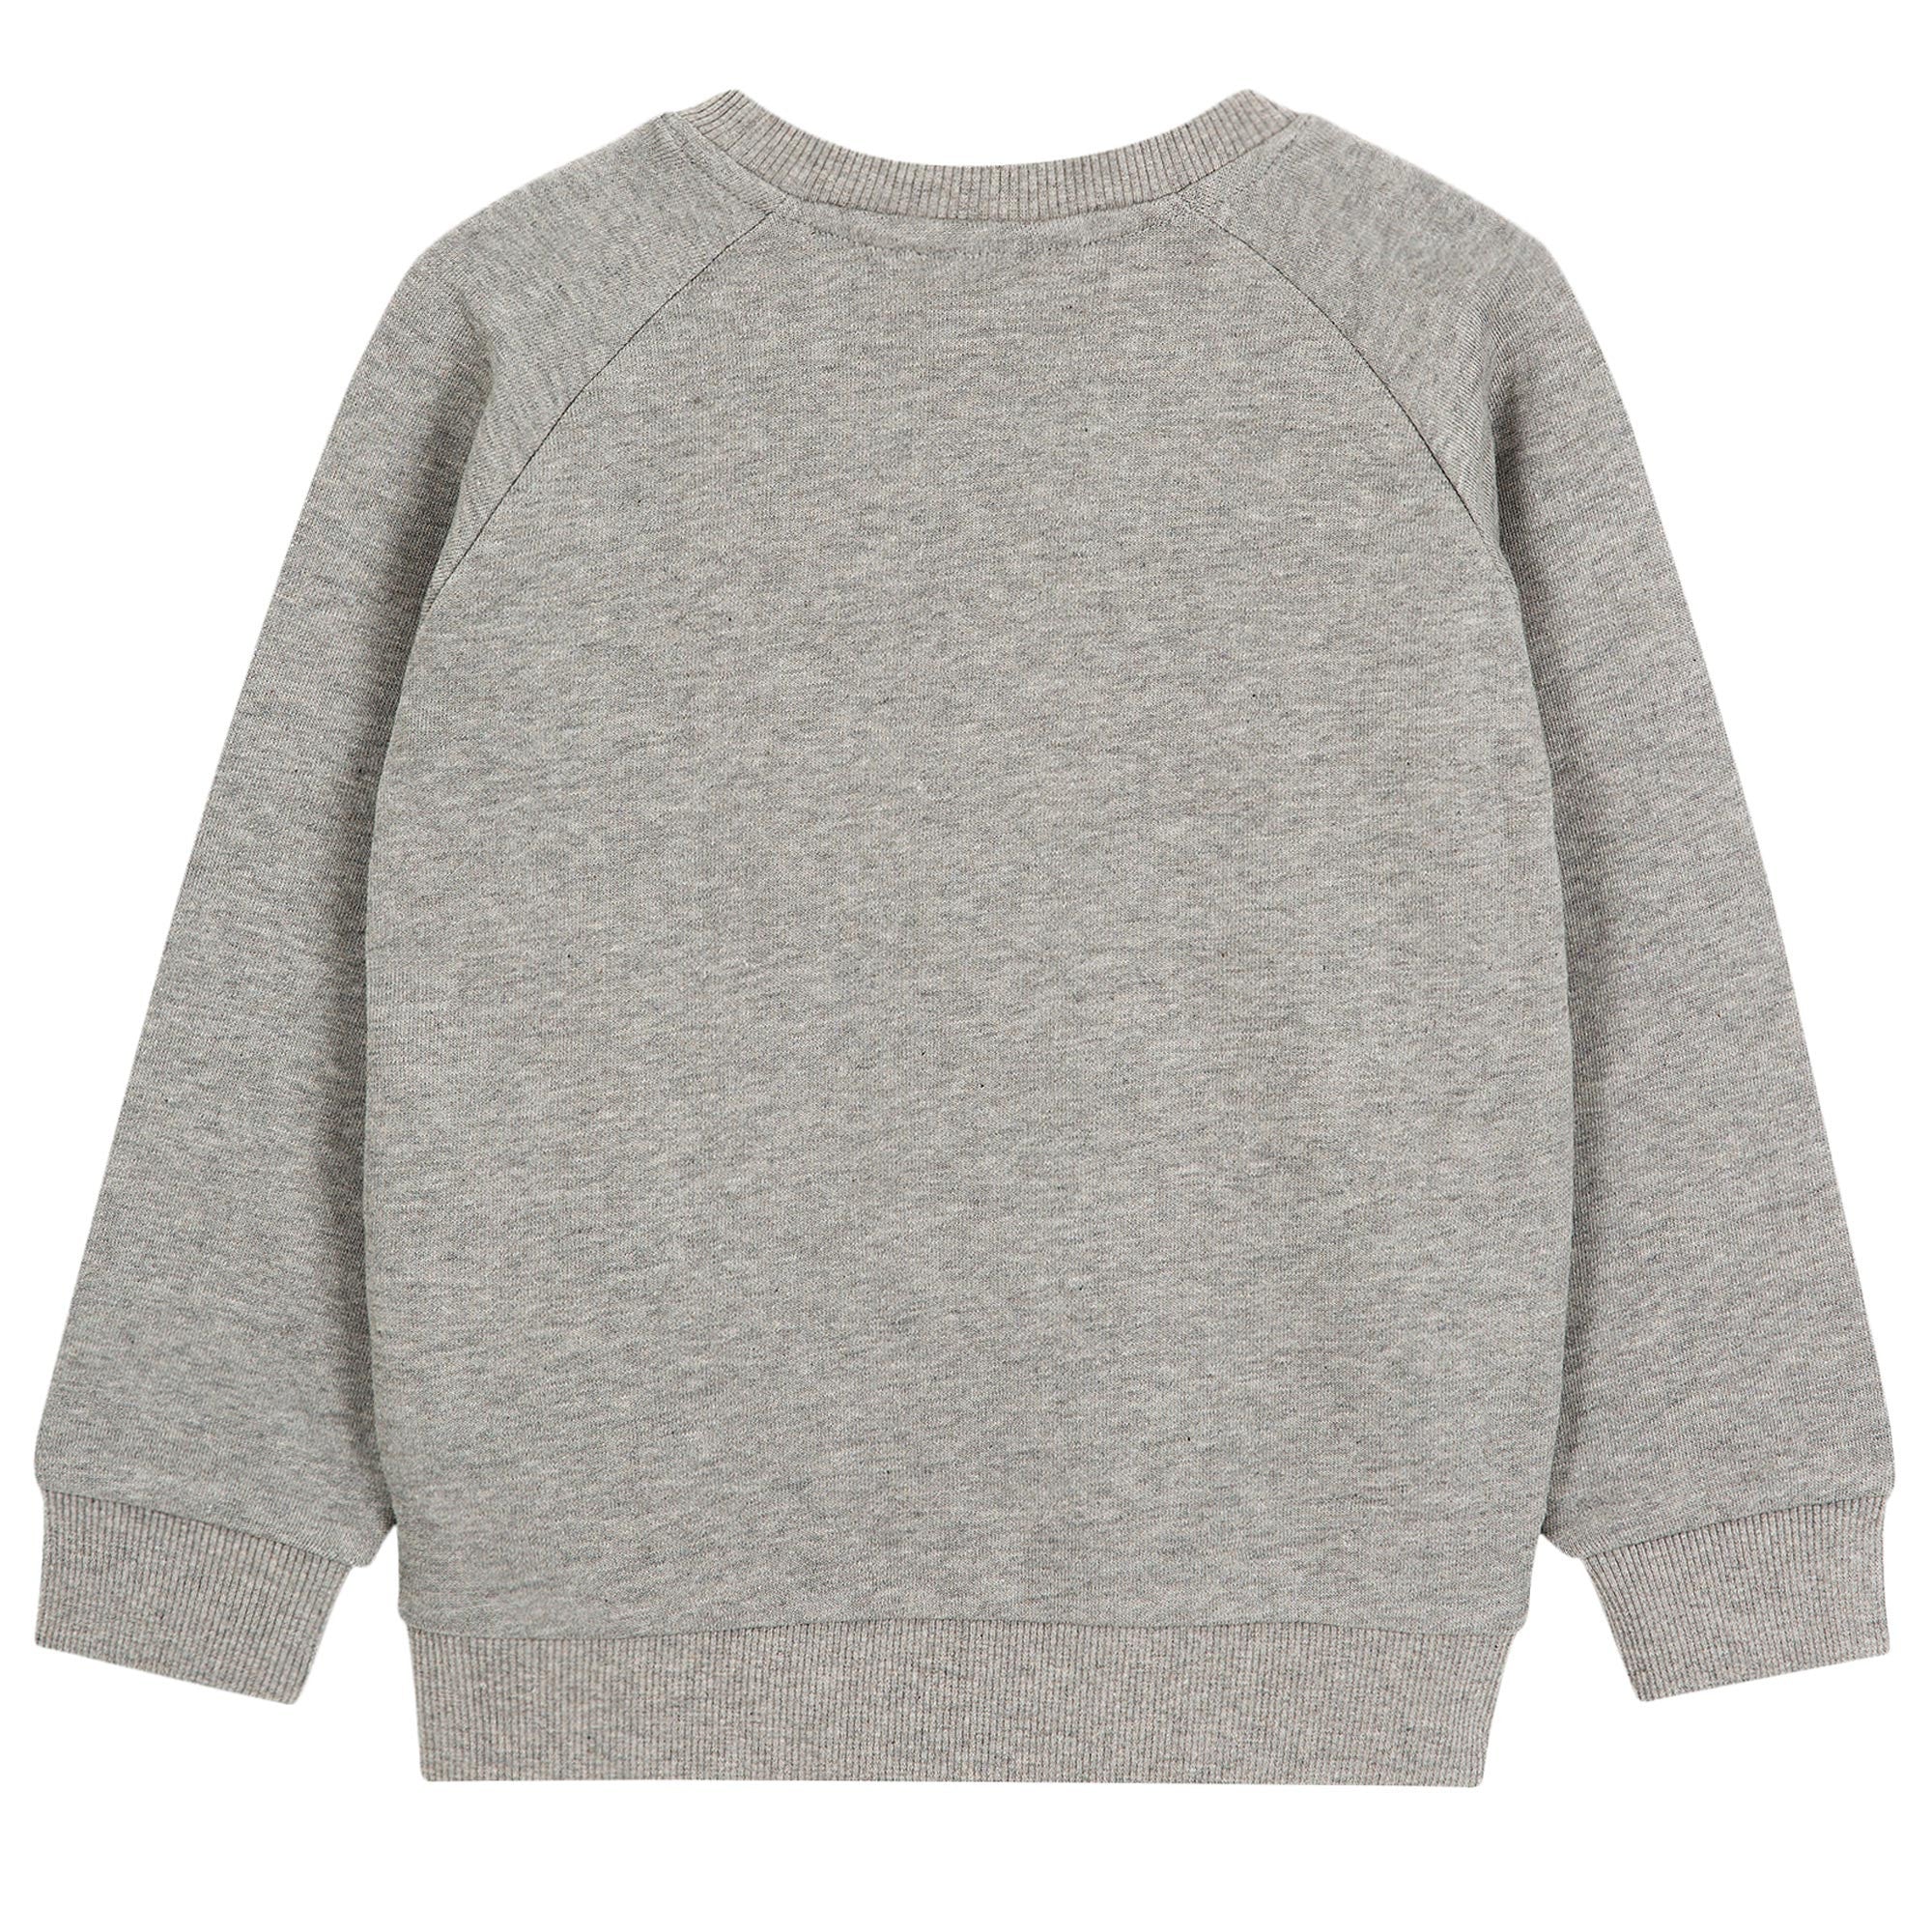 Boys & Girls Grey 'Sika deer' Printed Organic Cotton Sweatshirt - CÉMAROSE | Children's Fashion Store - 2